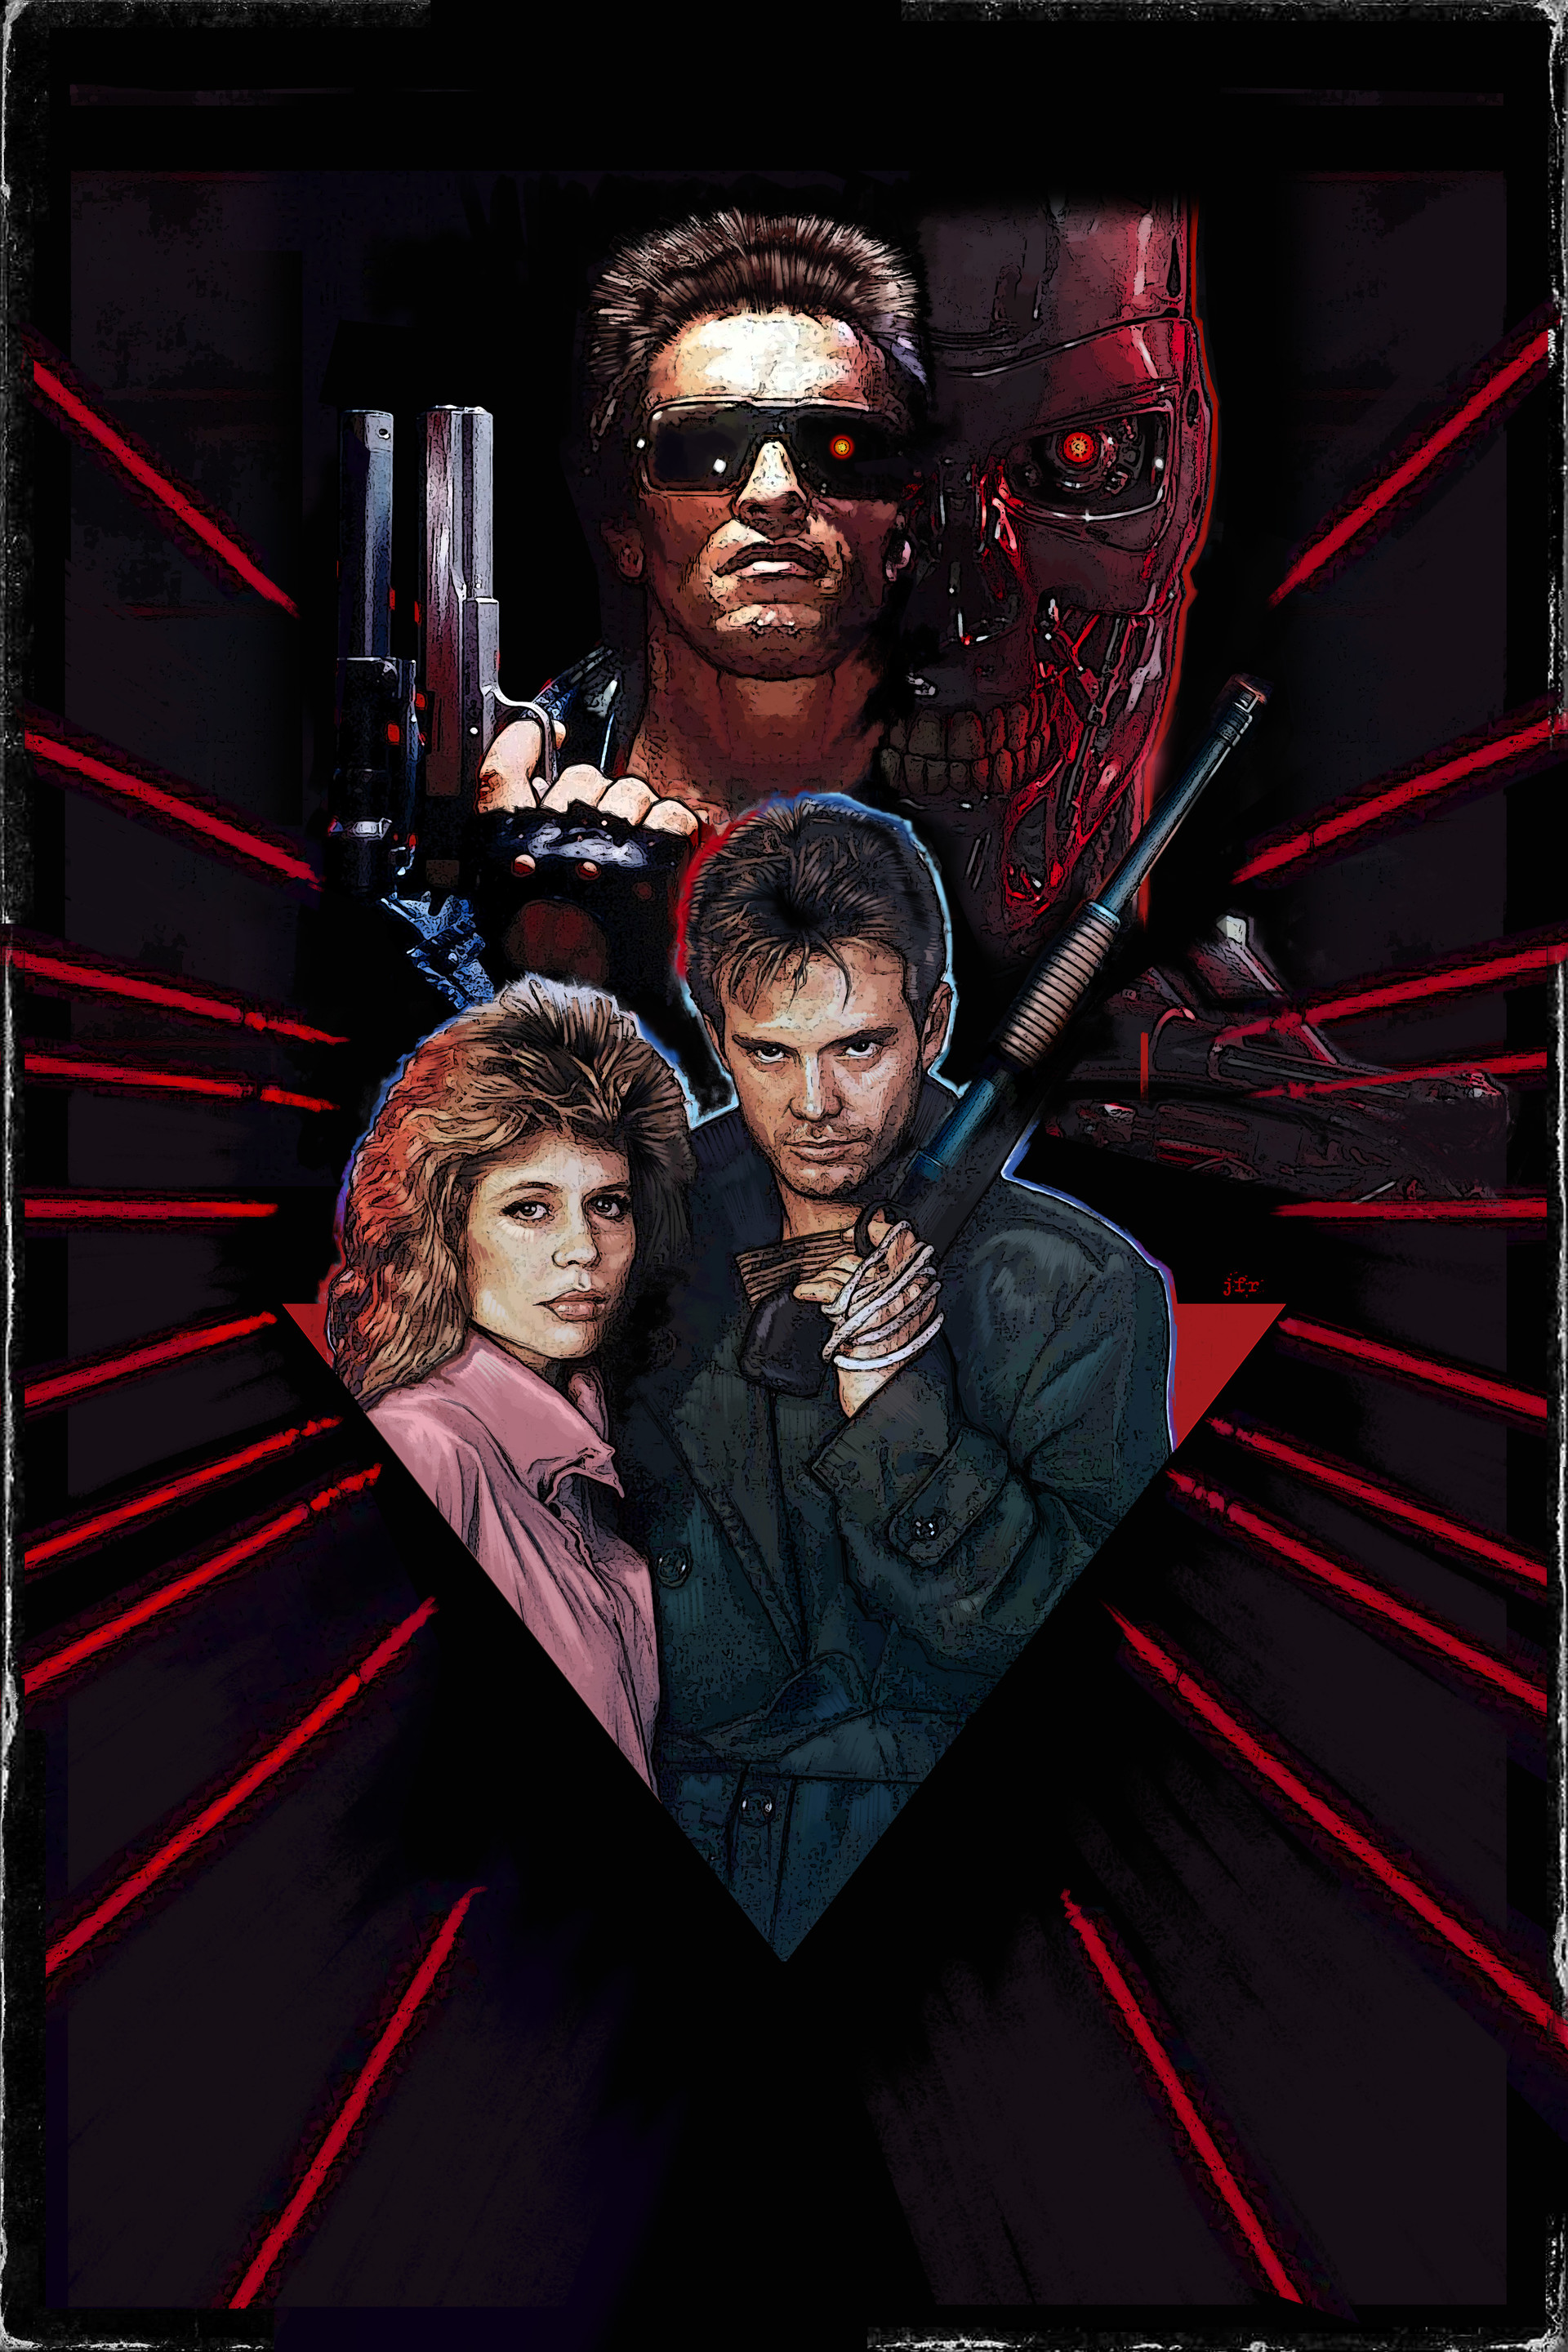 prompthunt: the terminator ( 1 9 8 4 ), 8 0's movie poster art